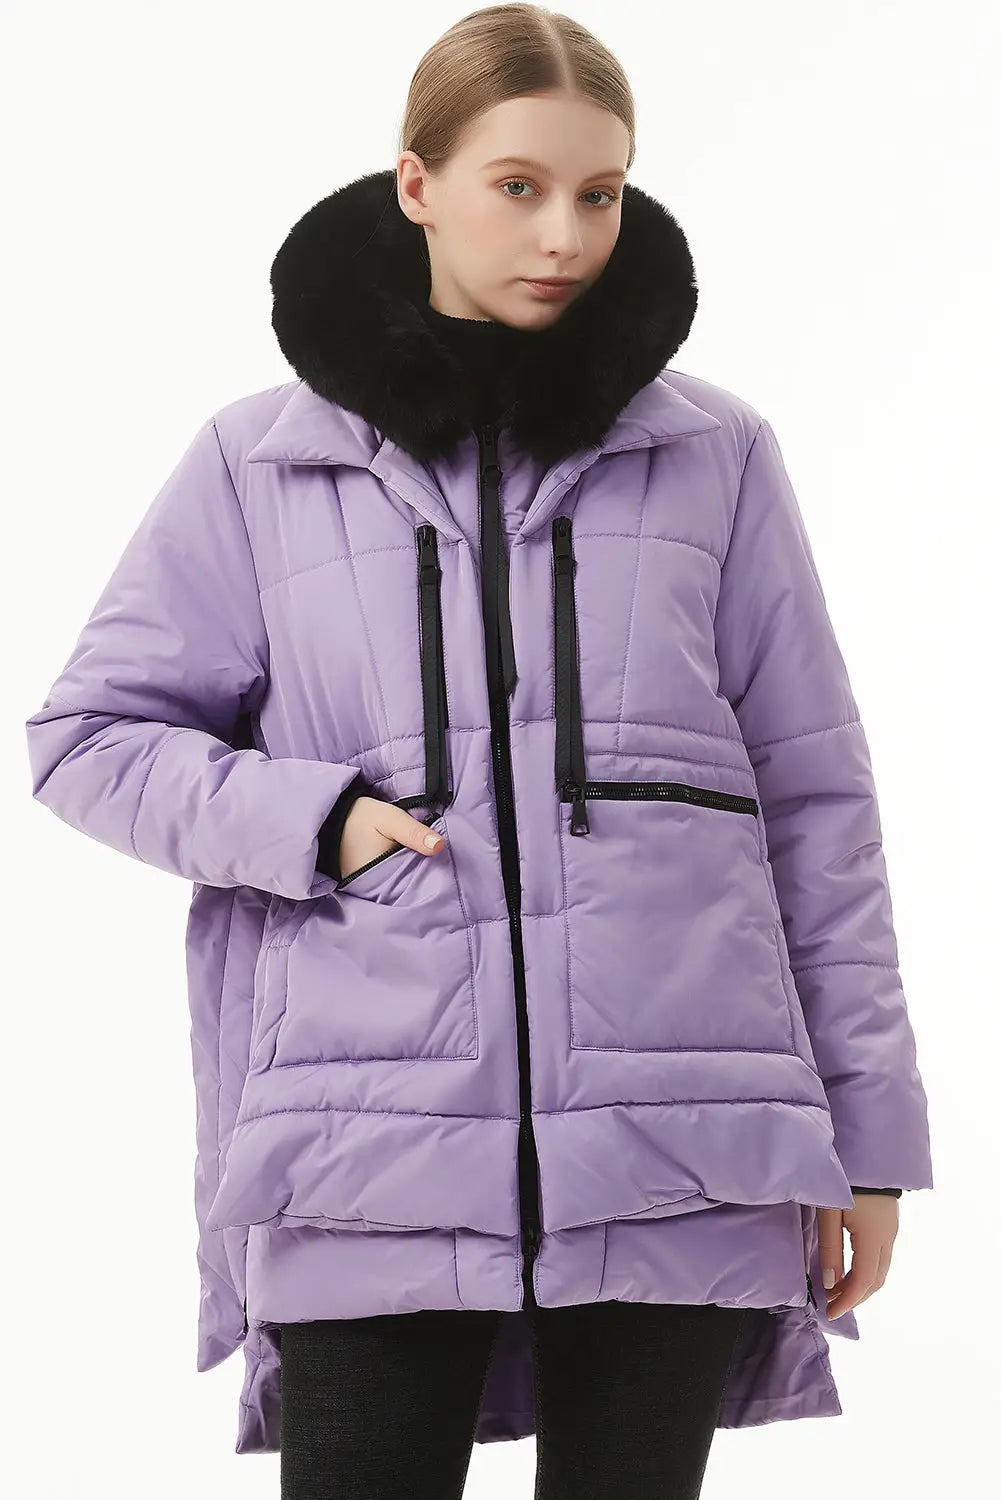 Wisteria plush linen zip up hooded puffer coat - outerwear